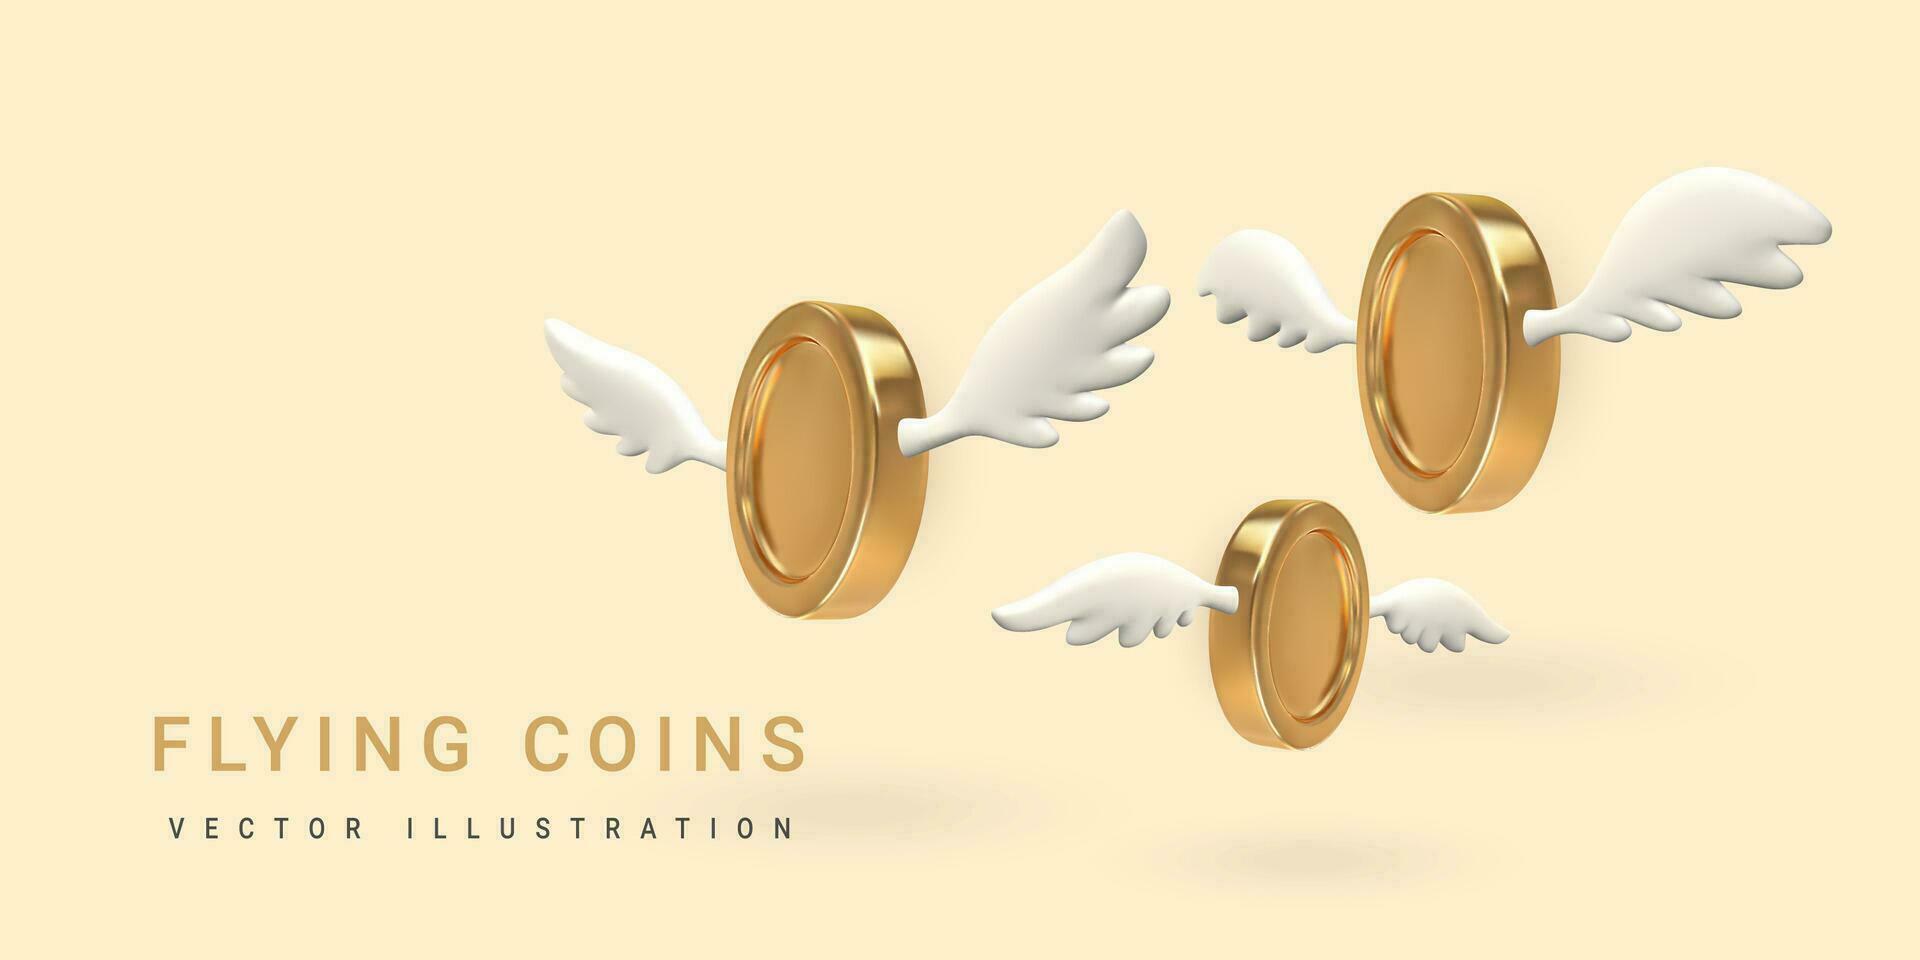 3d flygande gyllene mynt med vingar isolerat på en vit bakgrund. vektor illustration